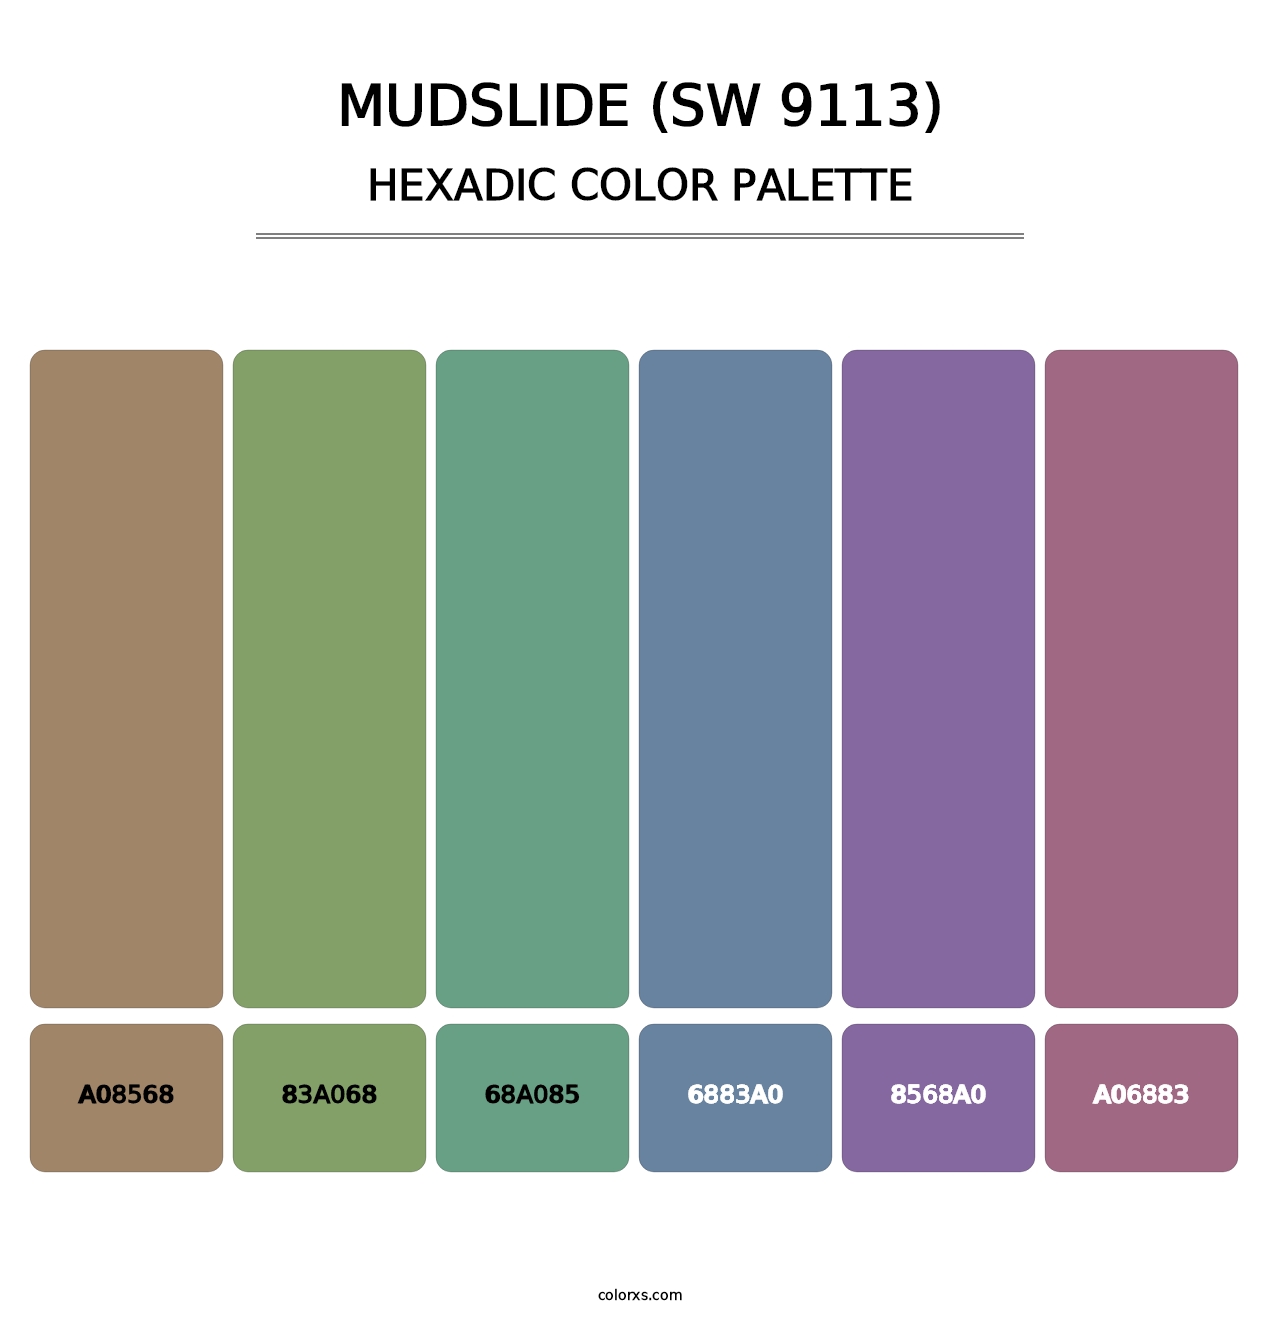 Mudslide (SW 9113) - Hexadic Color Palette